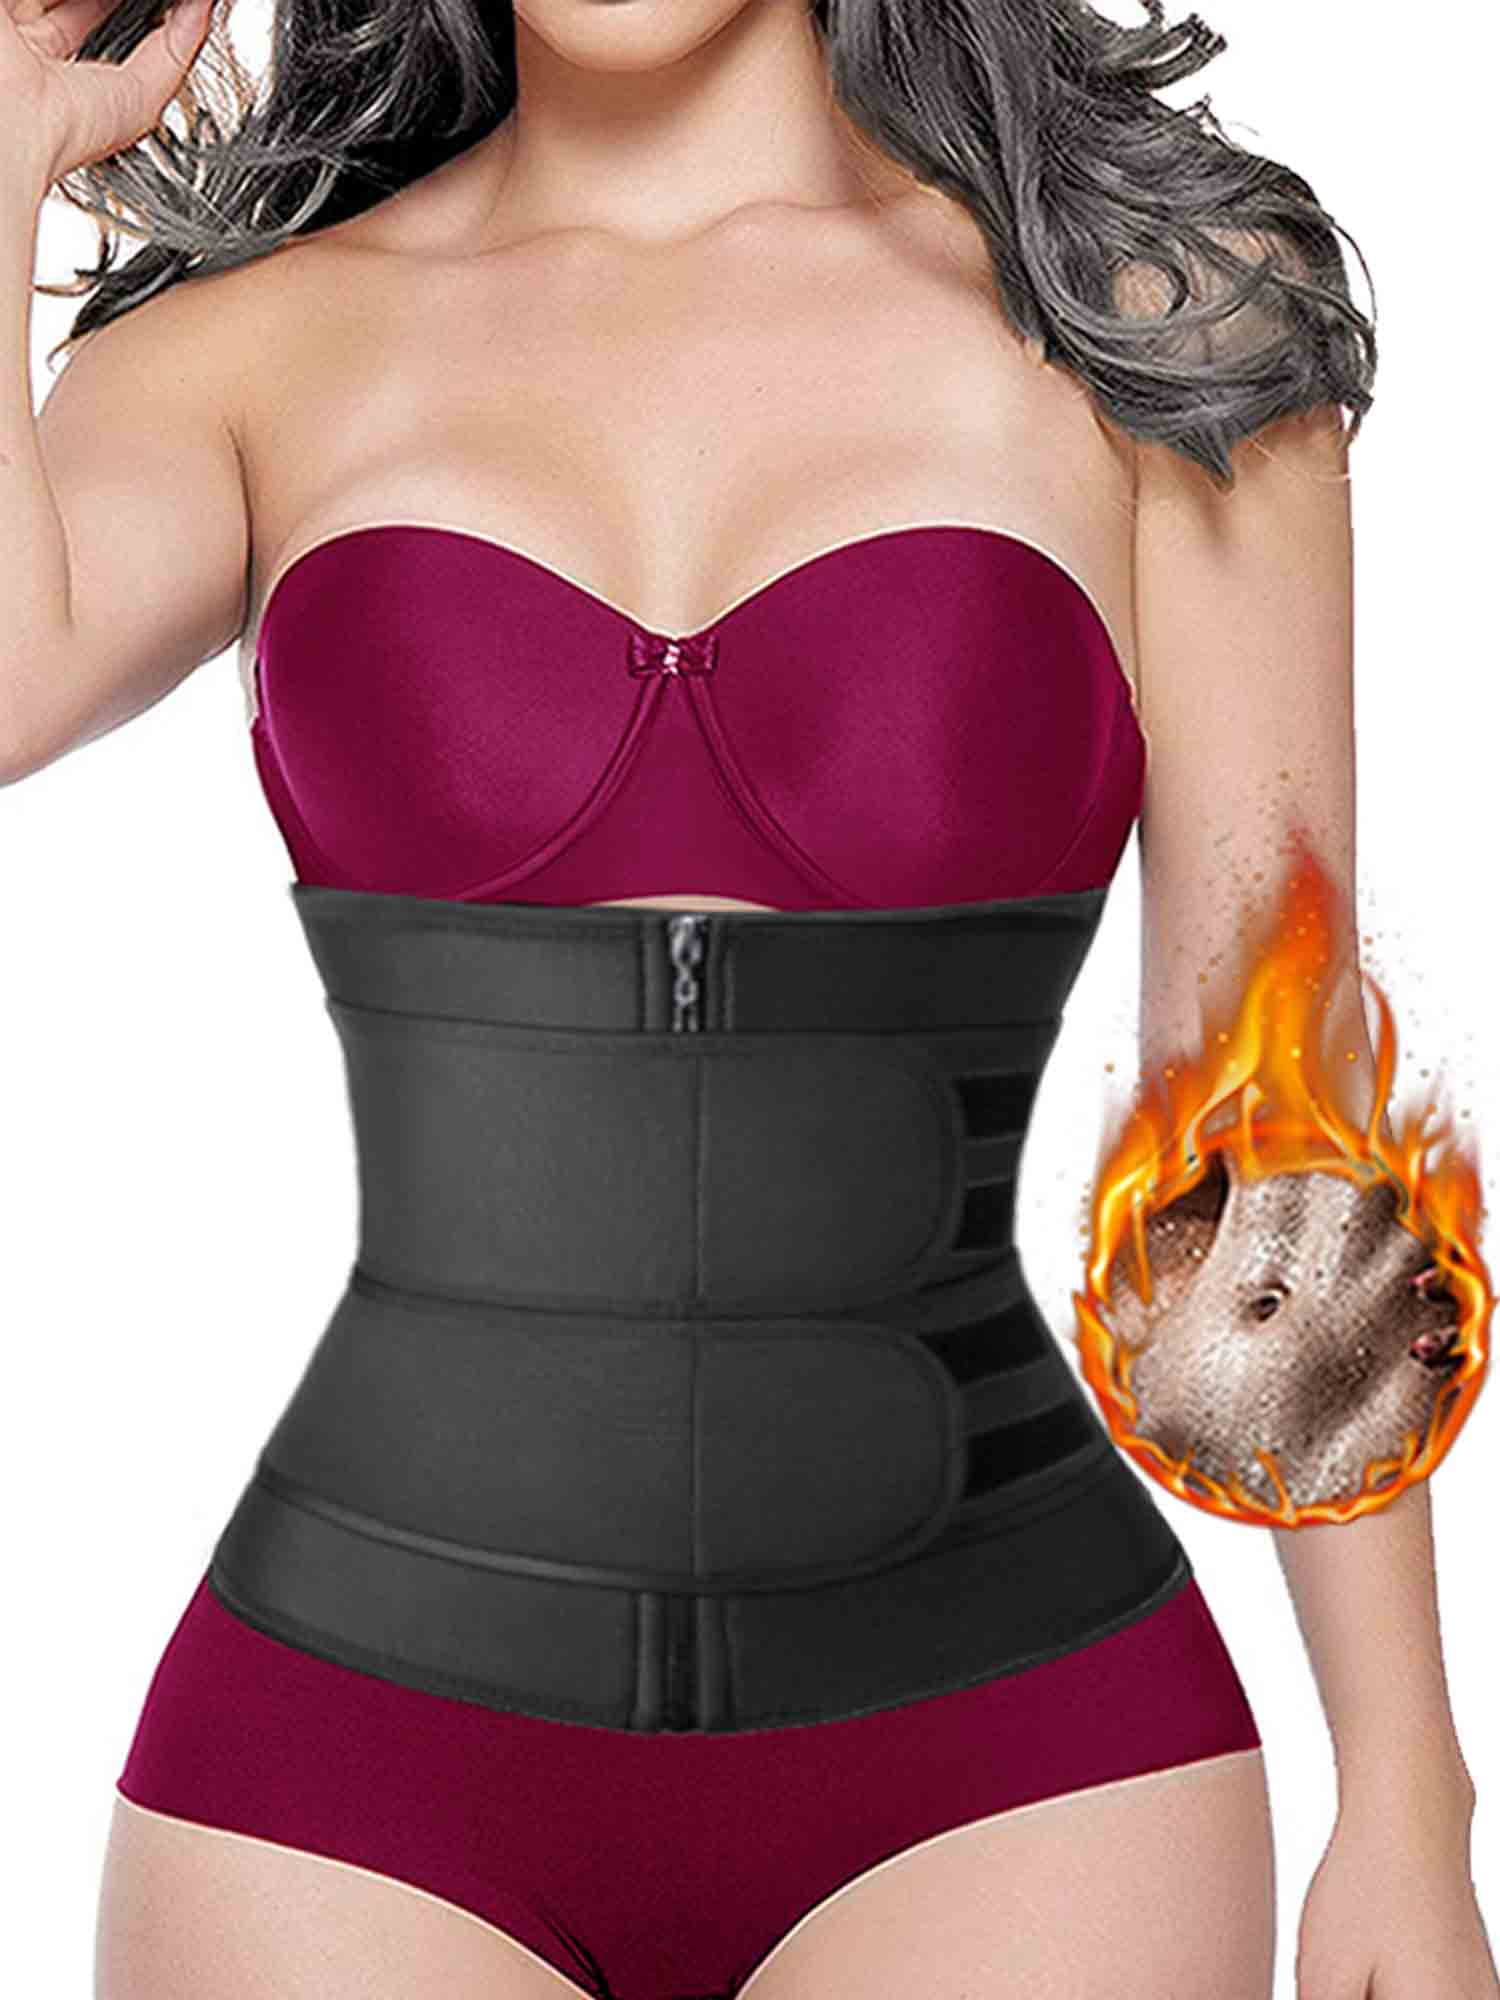 Details about   Hot Women Sauna Sweat Neoprene Body Shaper Waist Trainer Corset Hook Cami Vest 